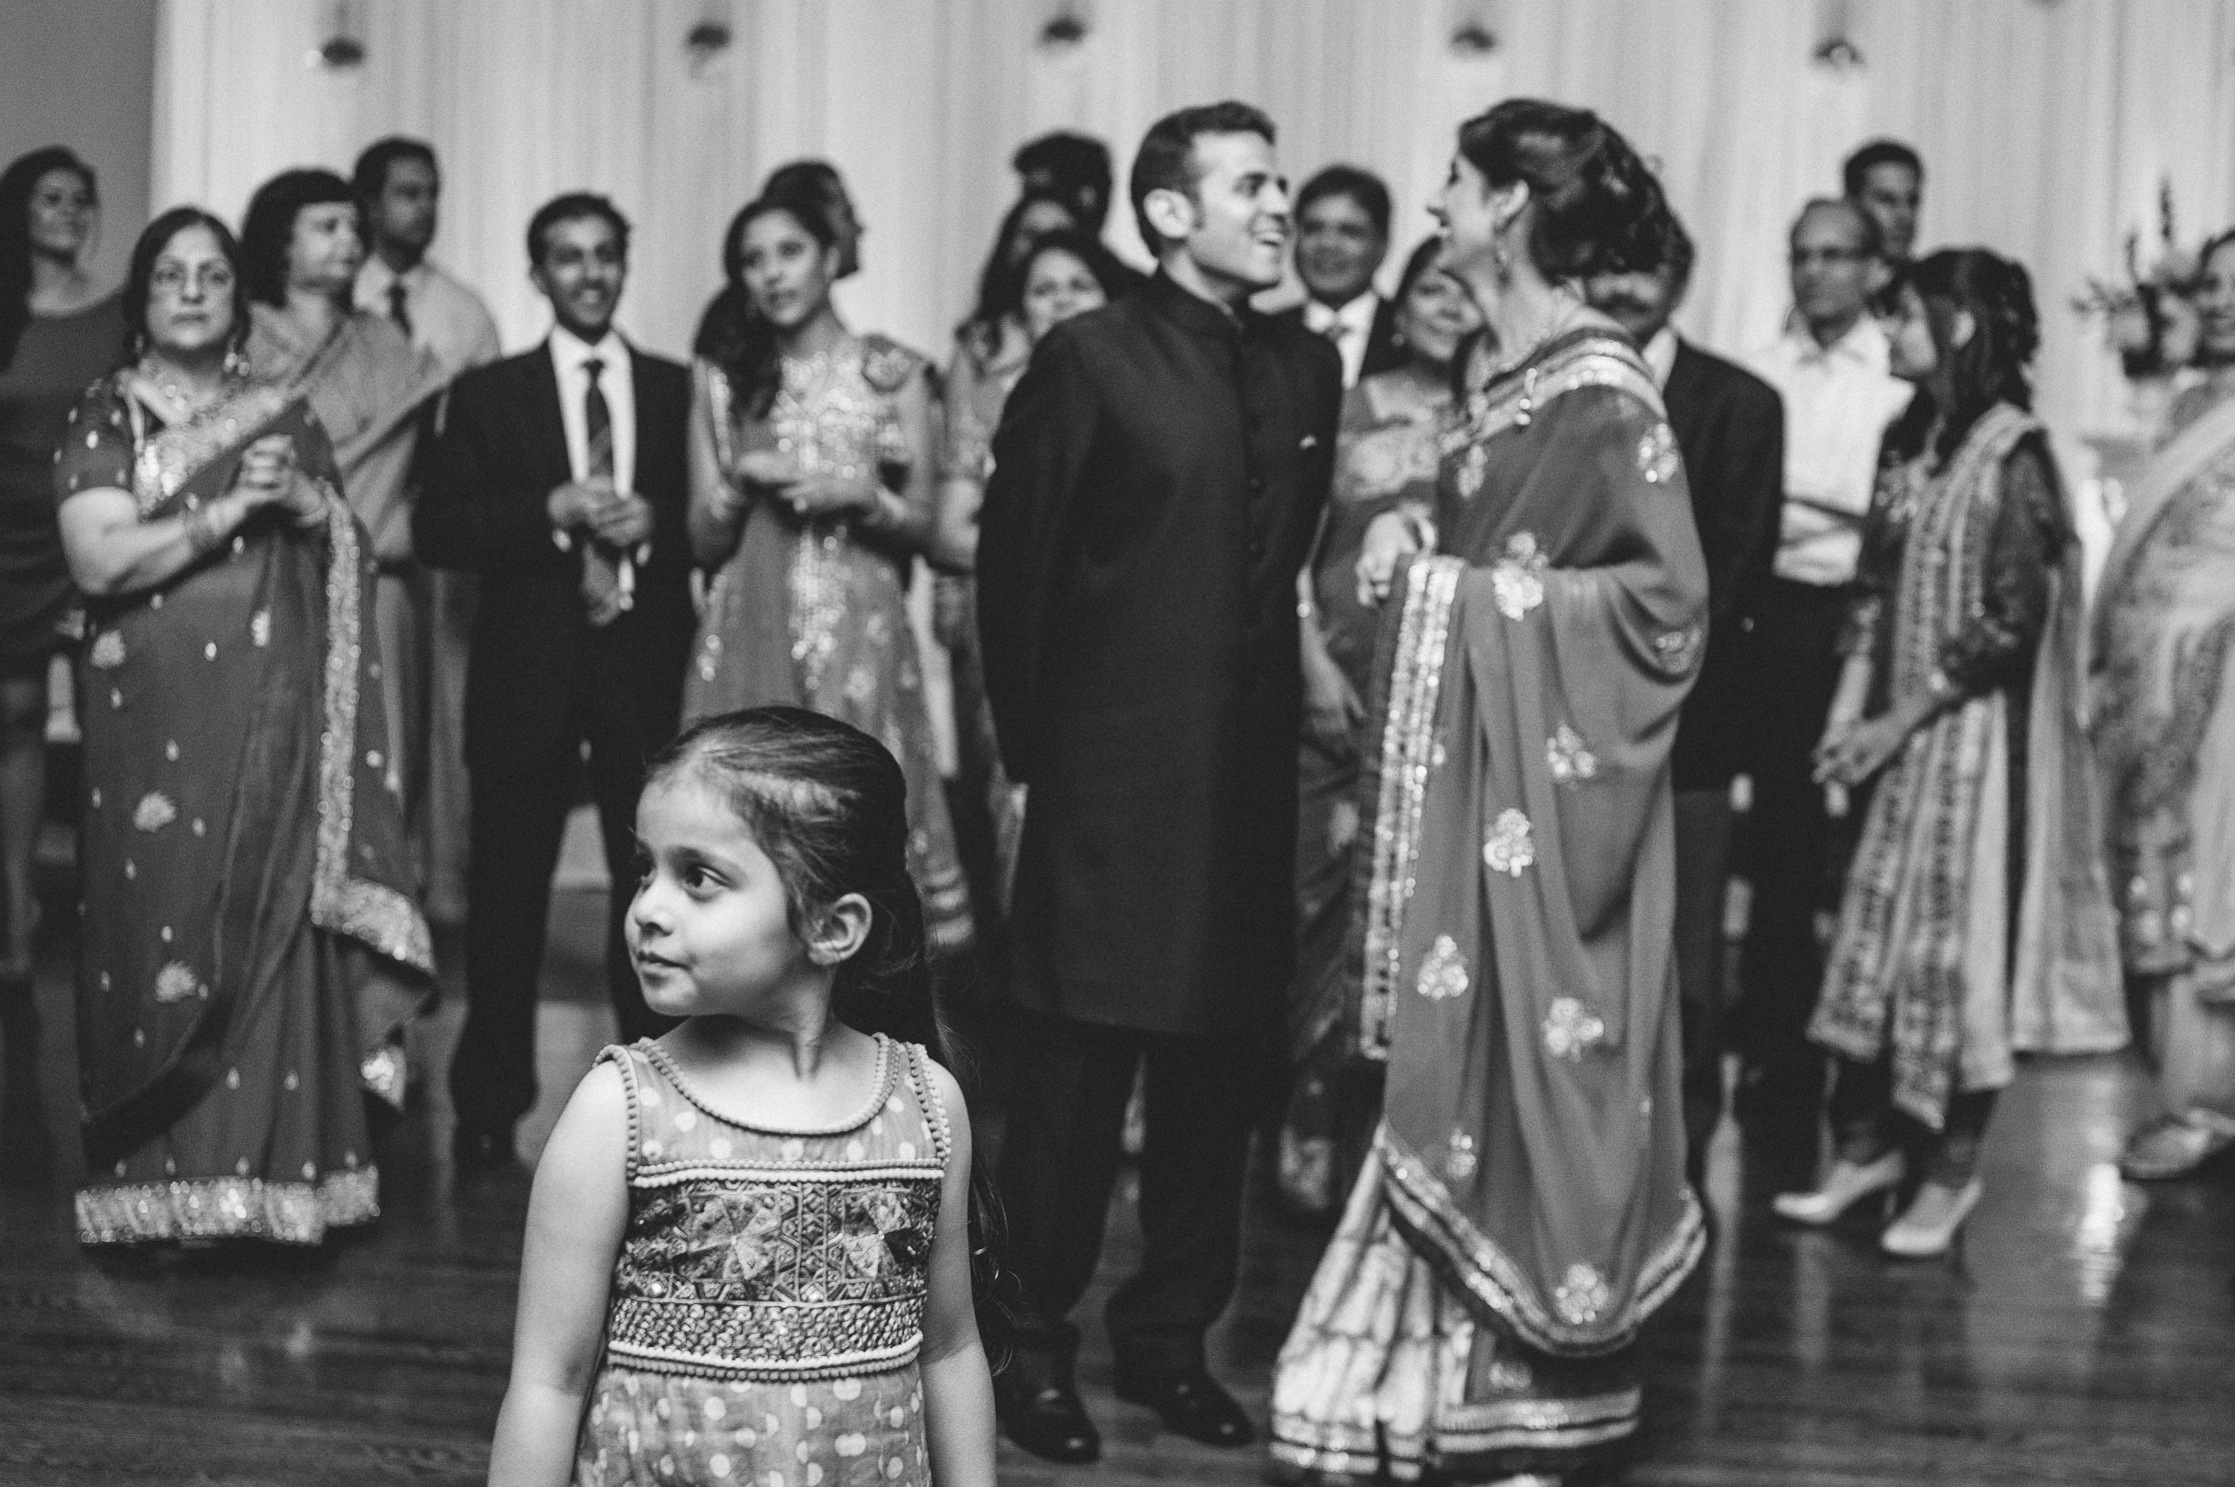 Indian wedding photographer washington dc Mantas Kubilinskas-5.jpg